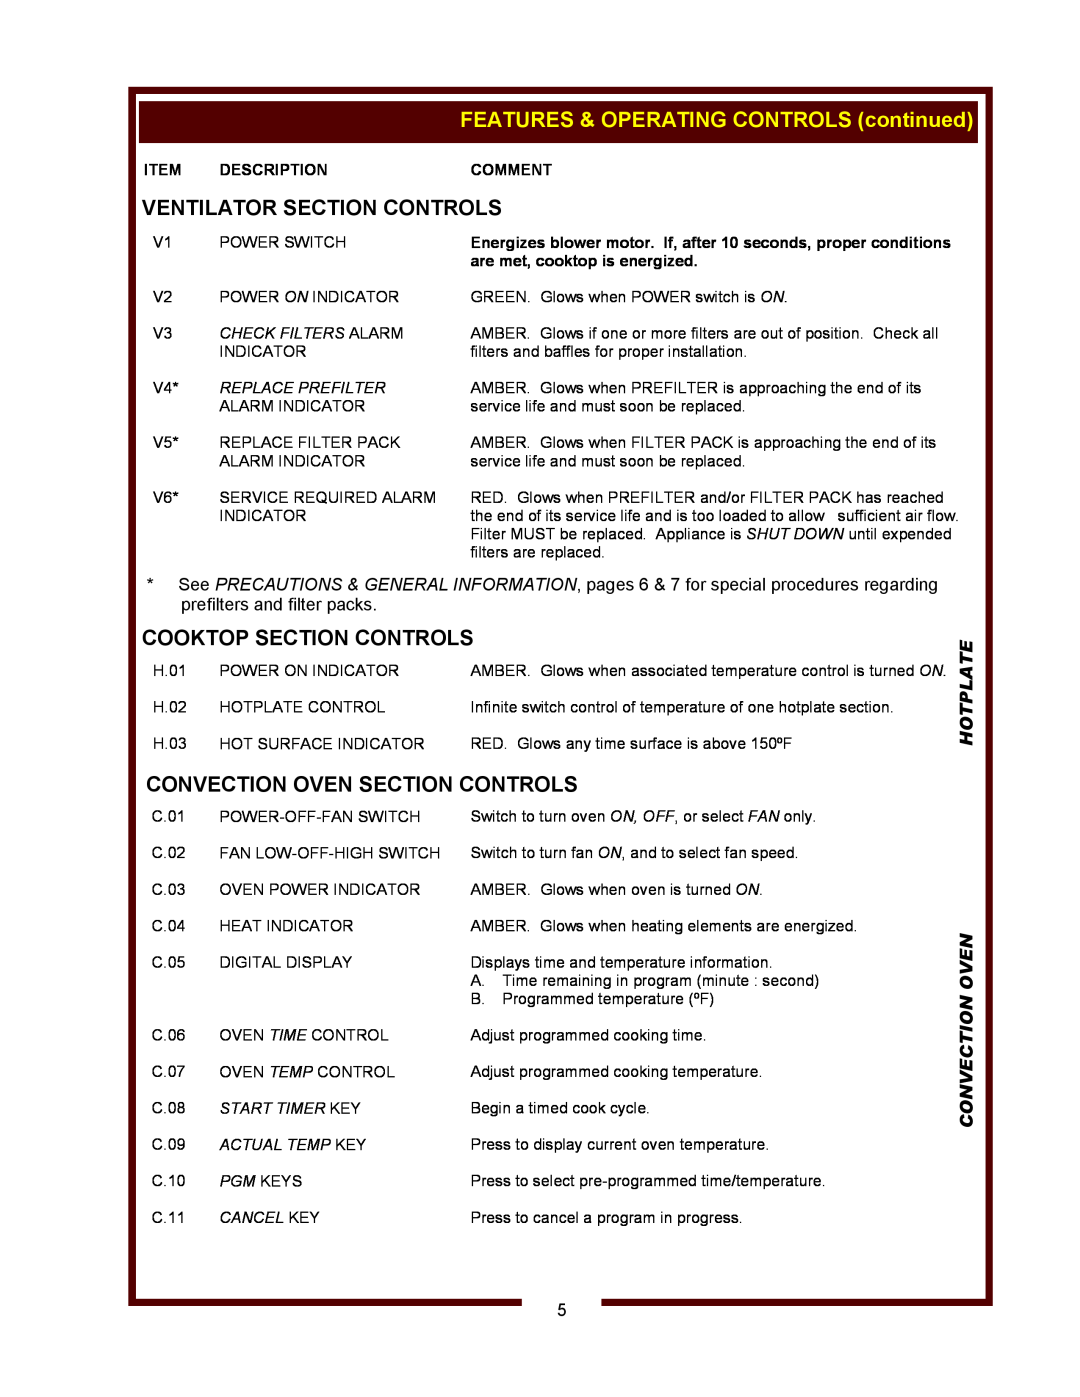 Wells WVOC-4HC Ventilator Section Controls, Cooktop Section Controls, Convection Oven Section Controls, Hotplate, Comment 